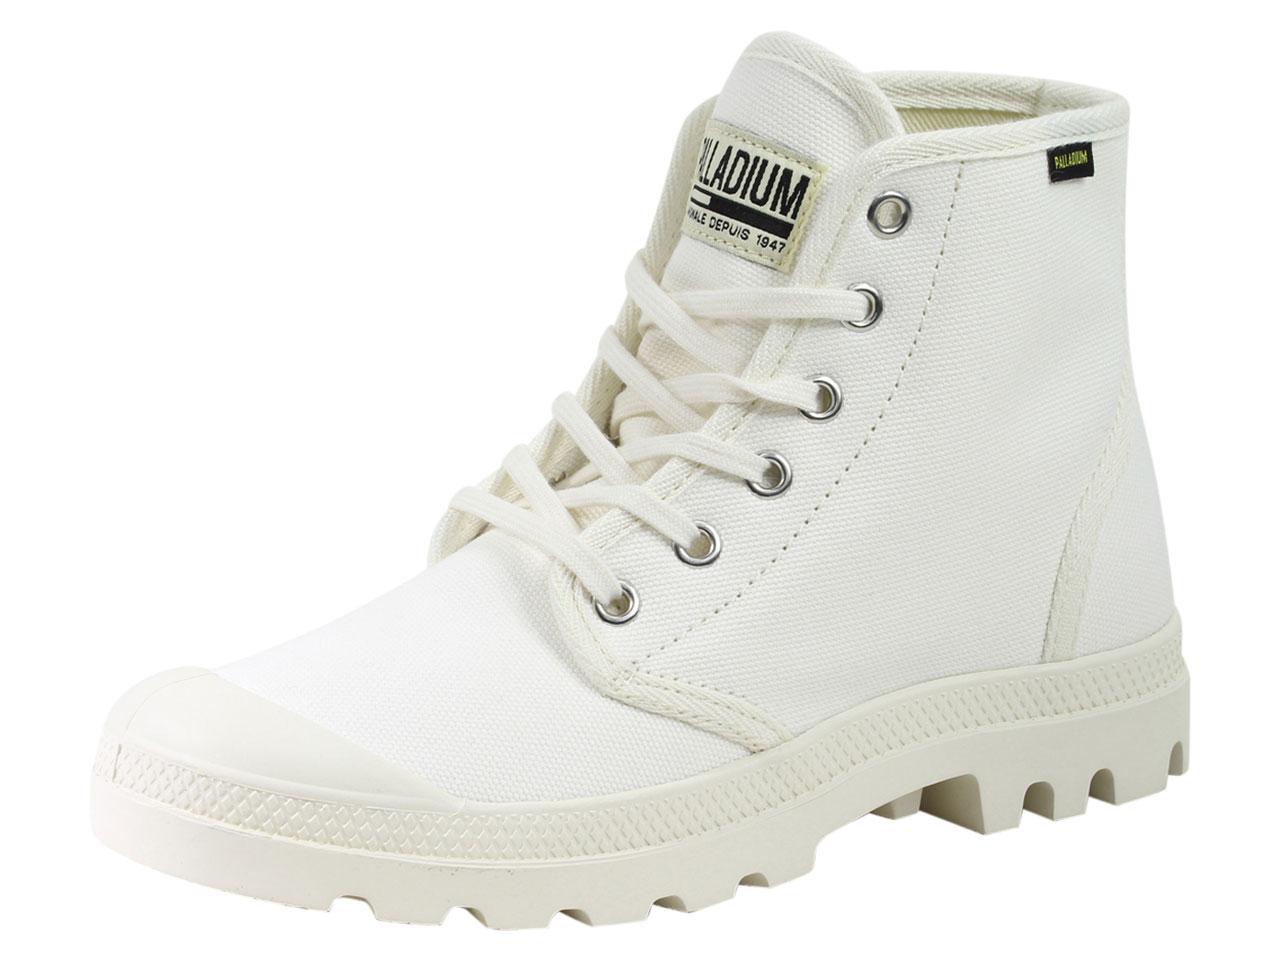 Palladium Men's Pampa Hi Originale Chukka Boots Shoes - White - 4.5 D(M) US/6 B(M) US